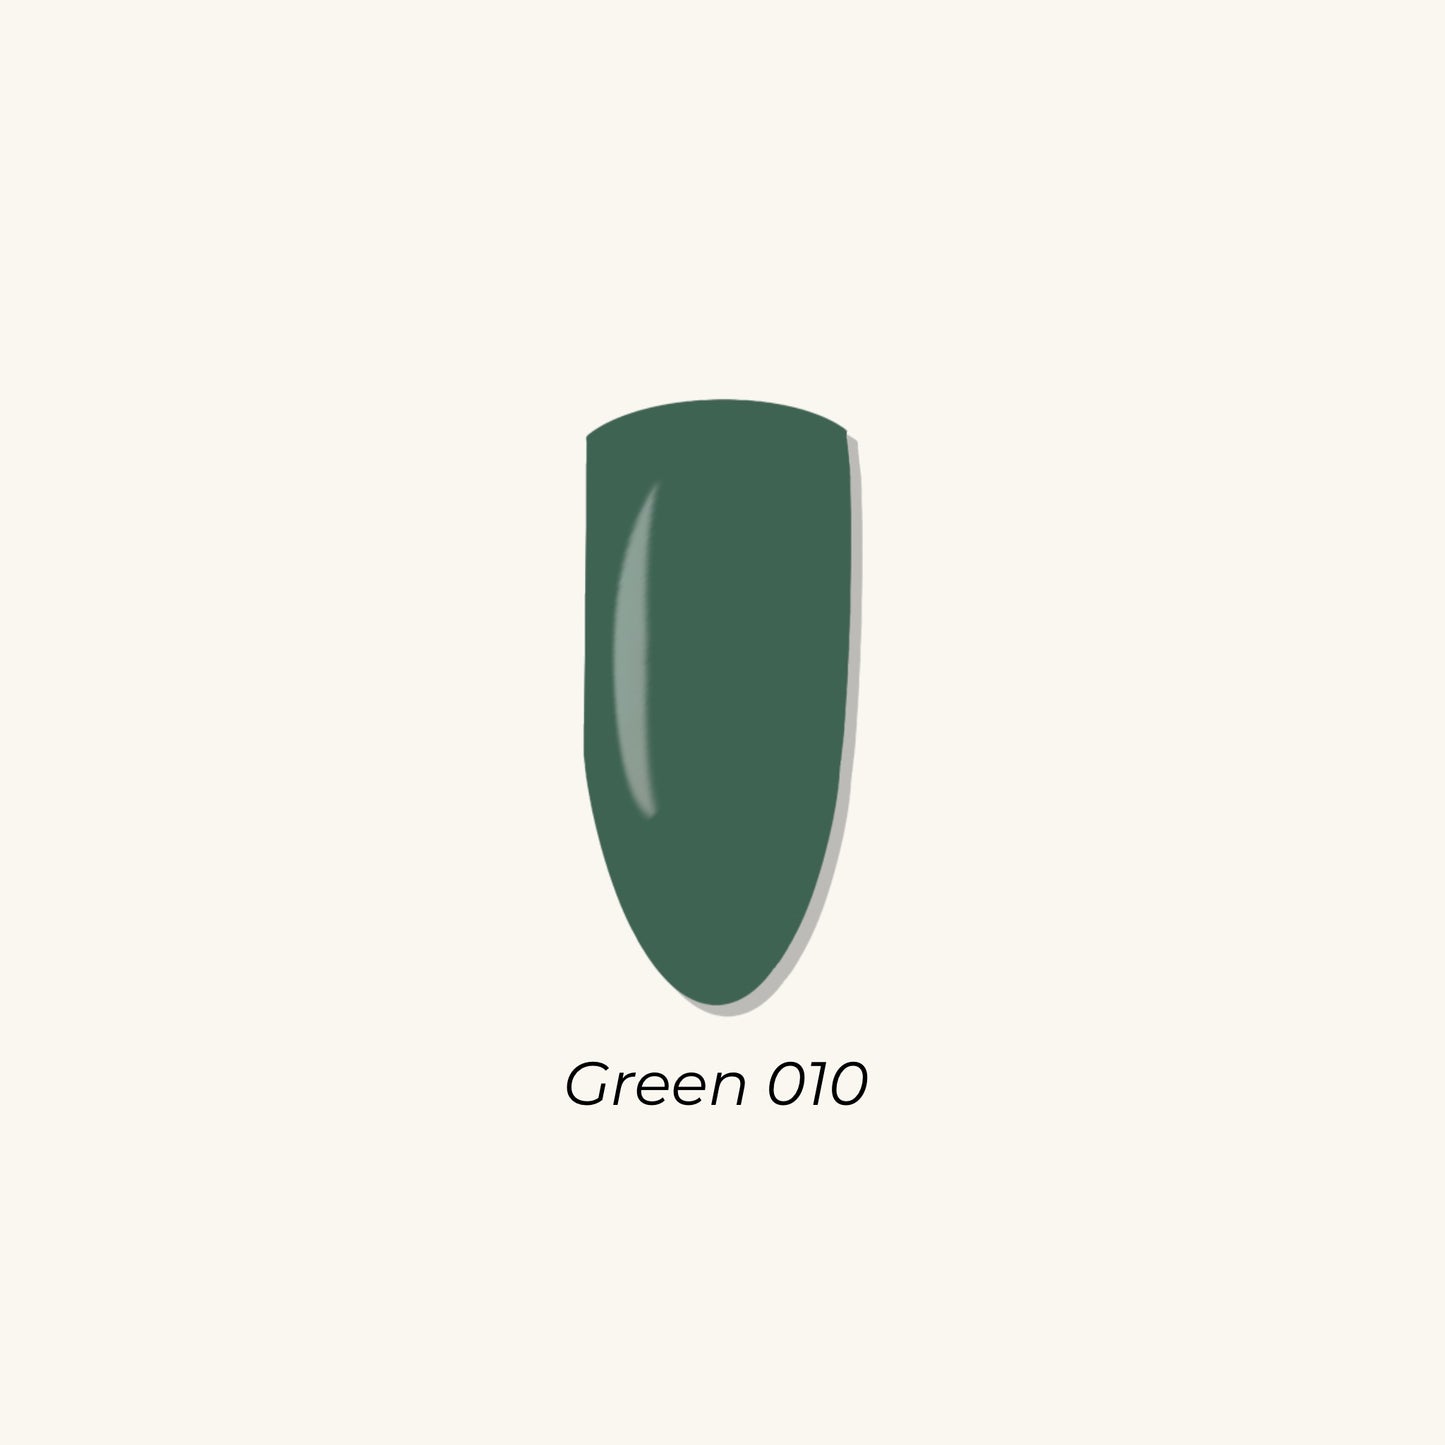 Green 010